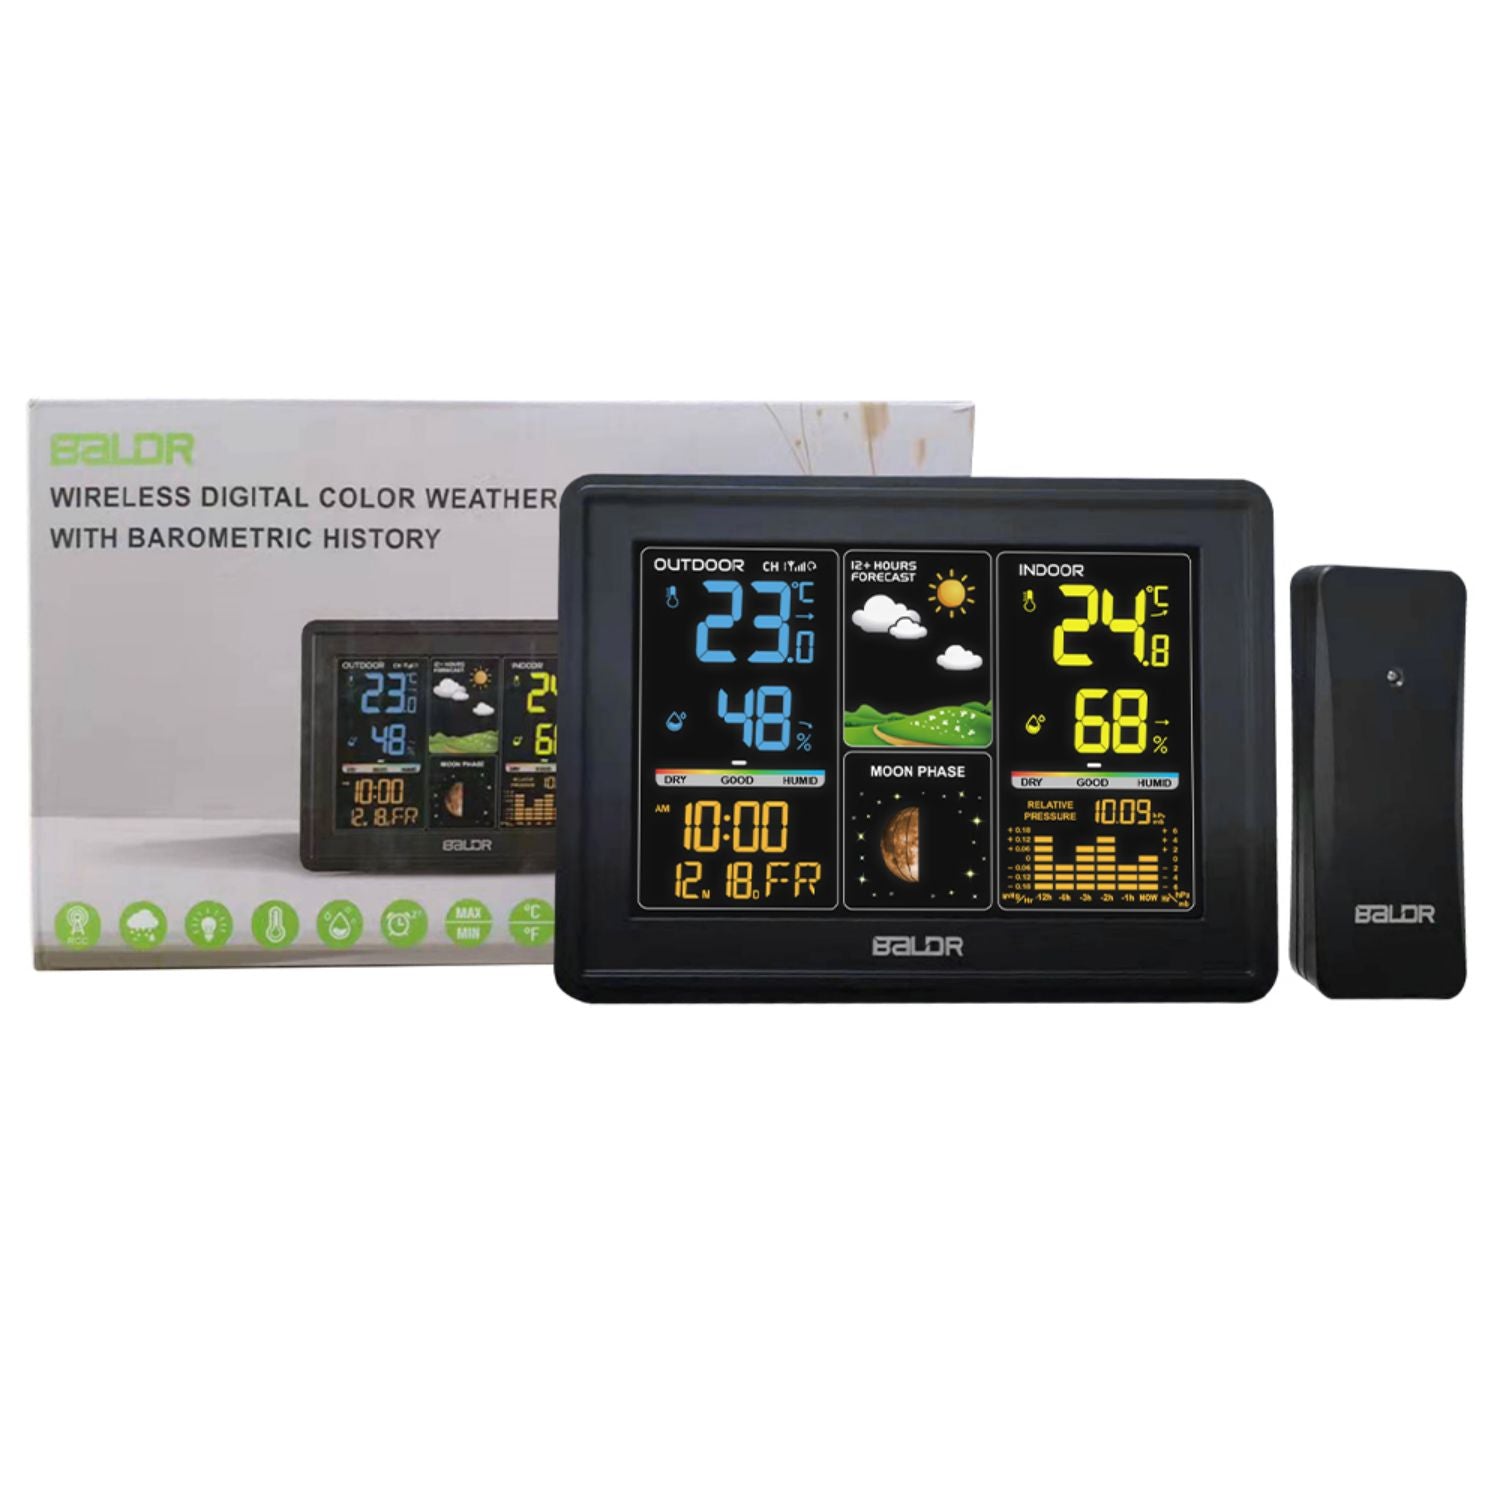 BALDR Indoor/Outdoor Wireless Touchscreen Thermometer